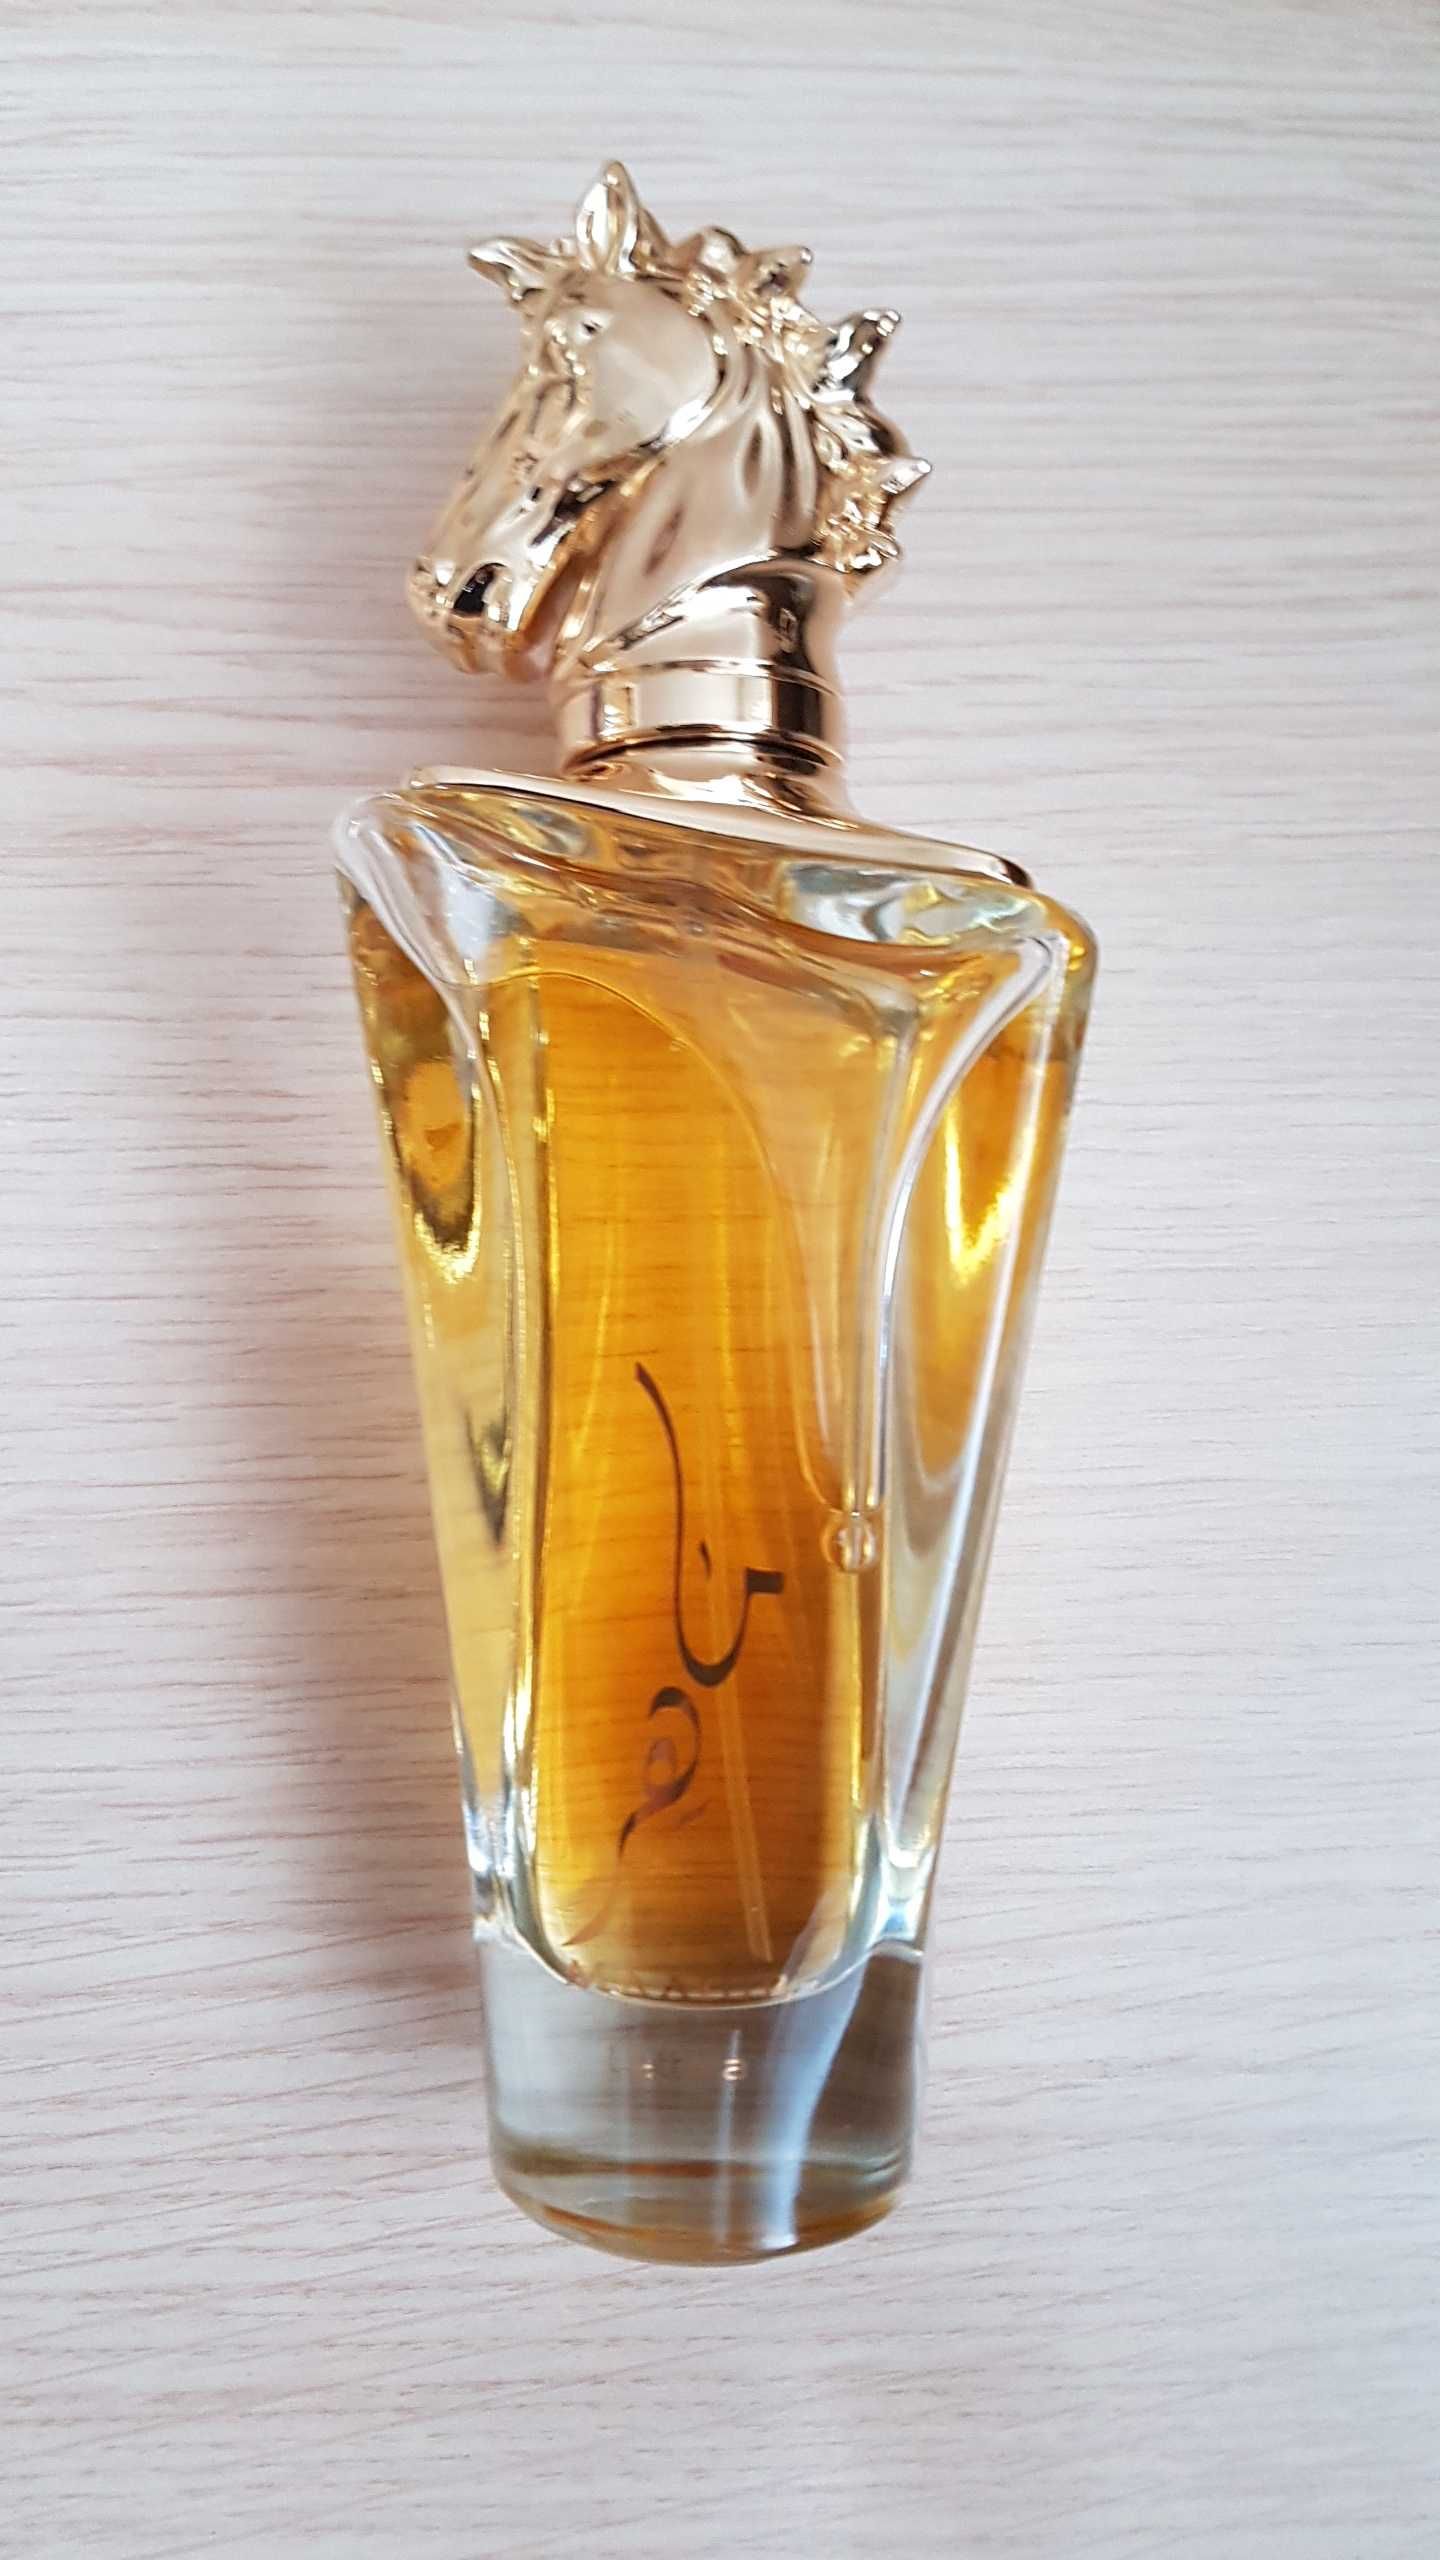 Lattafa Maahir 100ml nowe perfumy arabskie